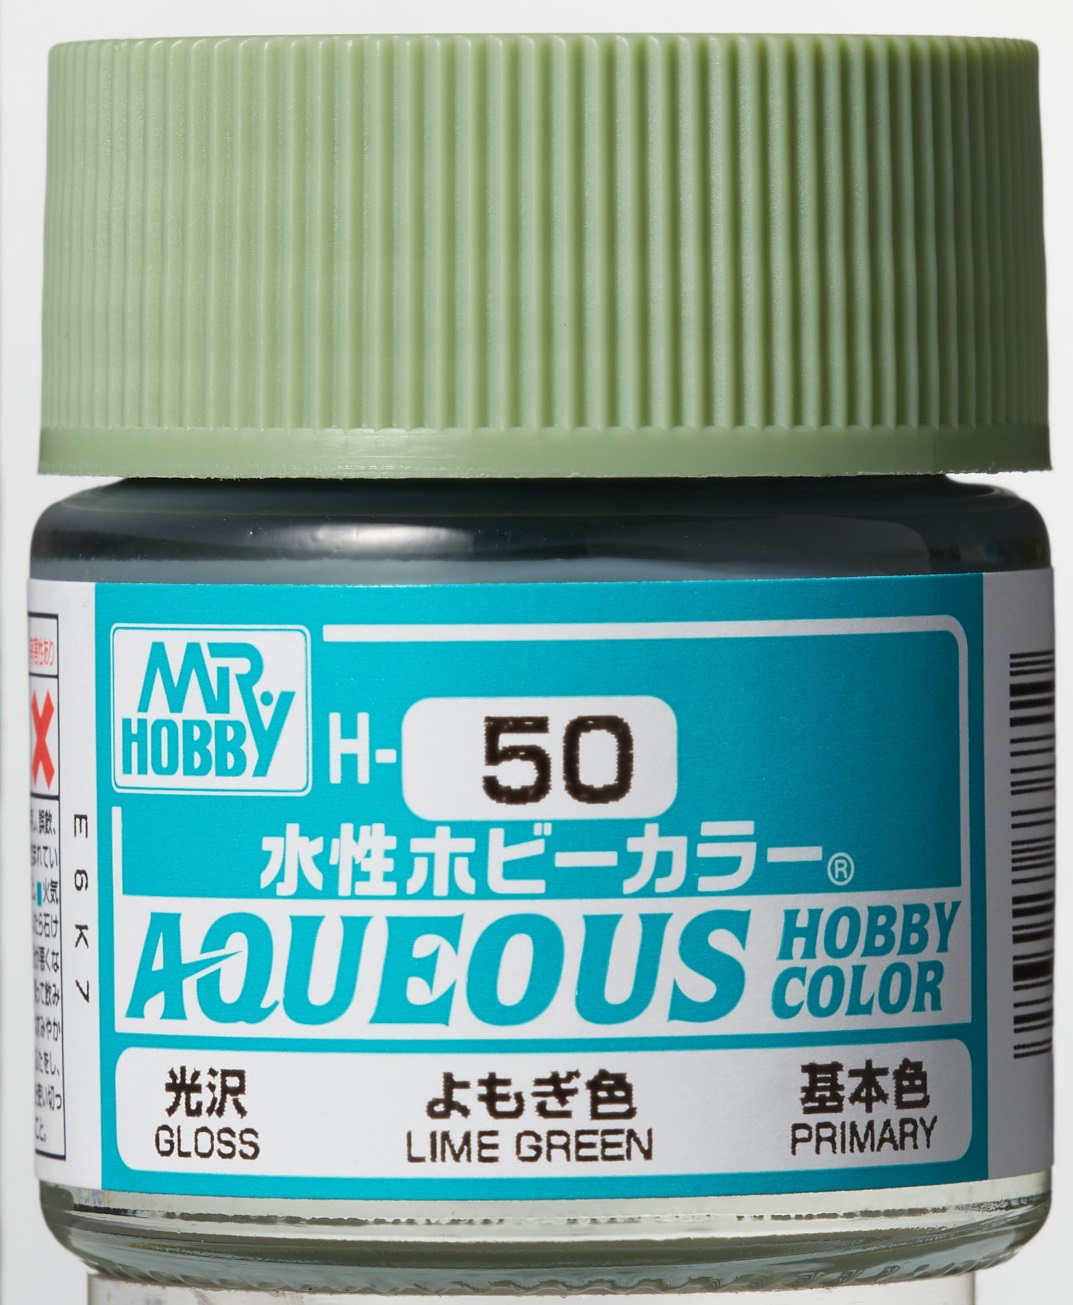 Mr. Aqueous Hobby Color - Lime Green - H50 - Limettengrün